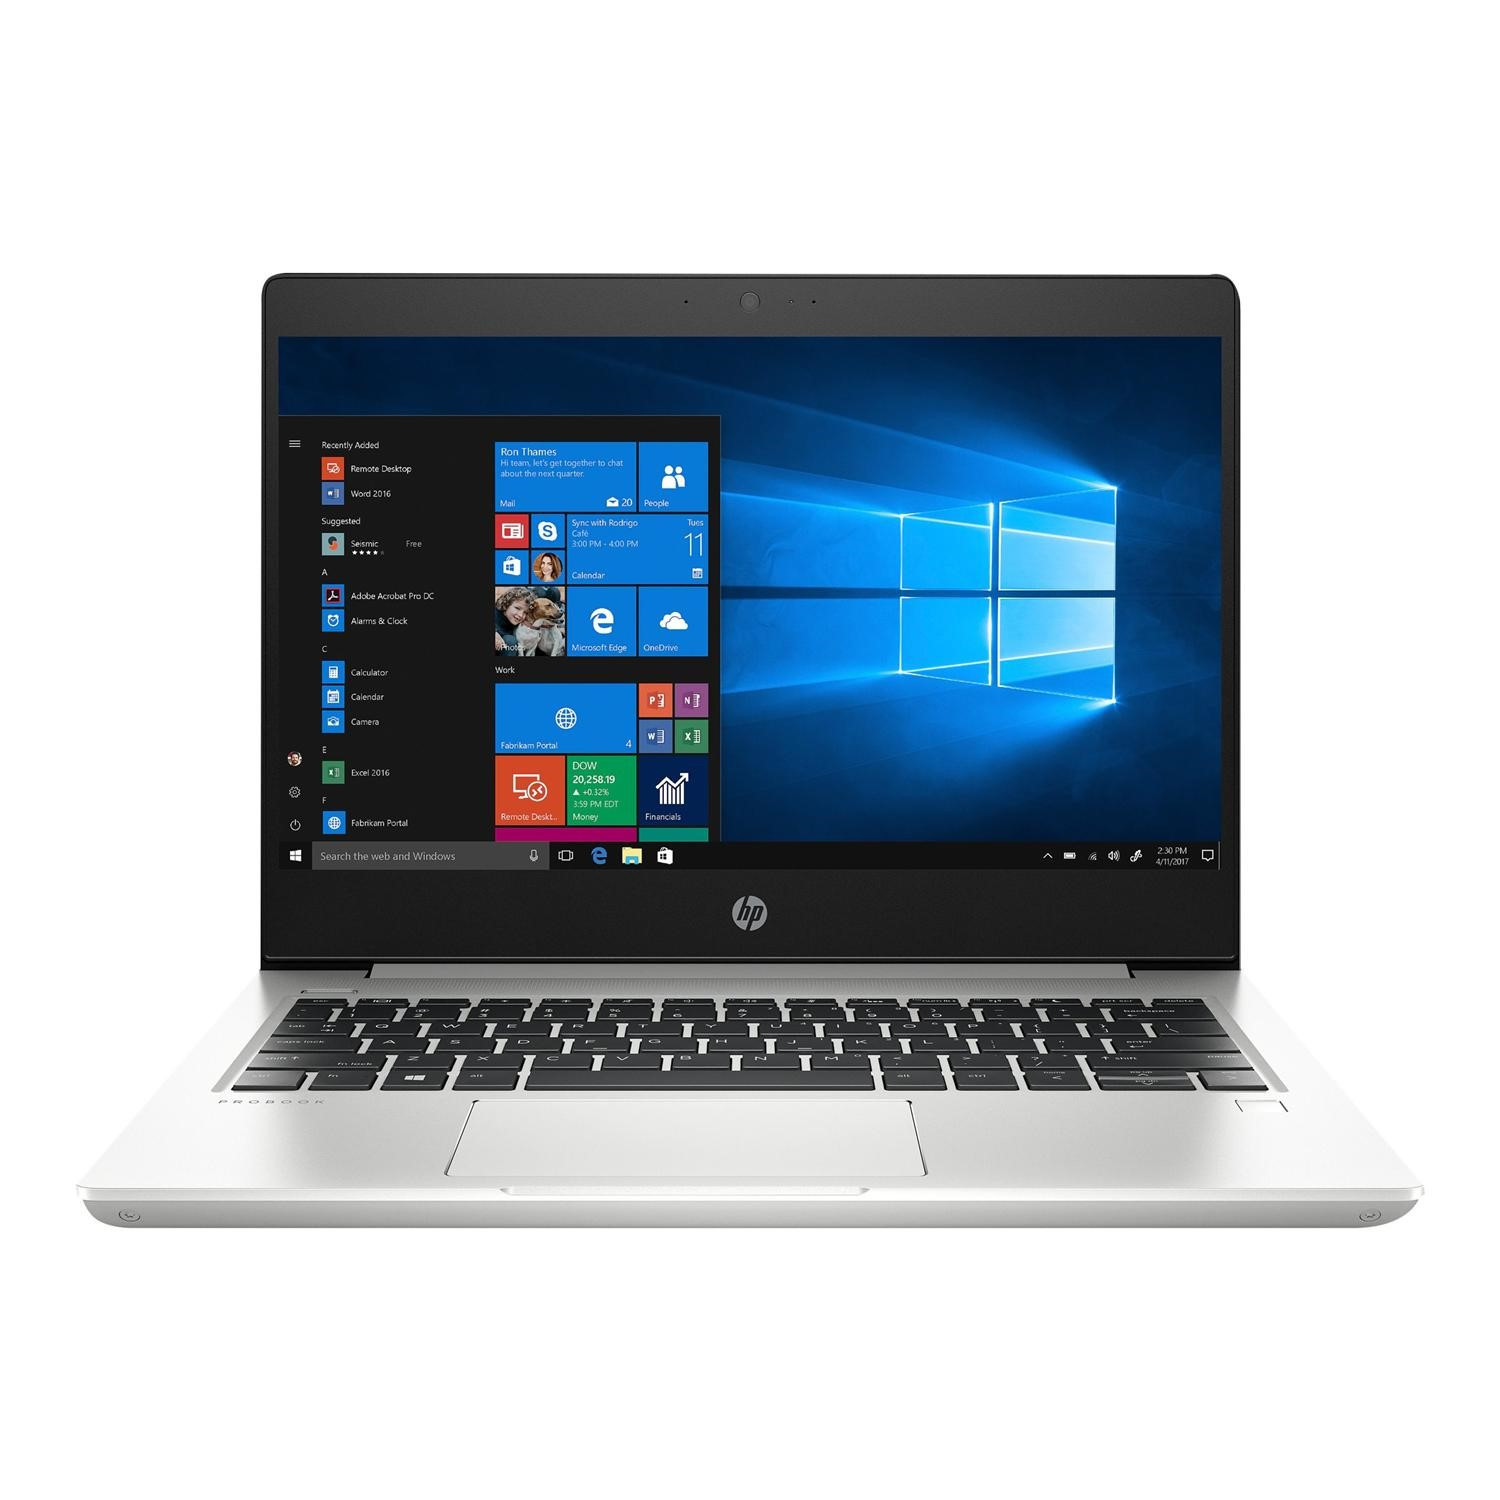 HP ProBook 430 G6 Core i5-8265U 8GB 256GB SSD 13 inch Windows 10 Pro Laptop